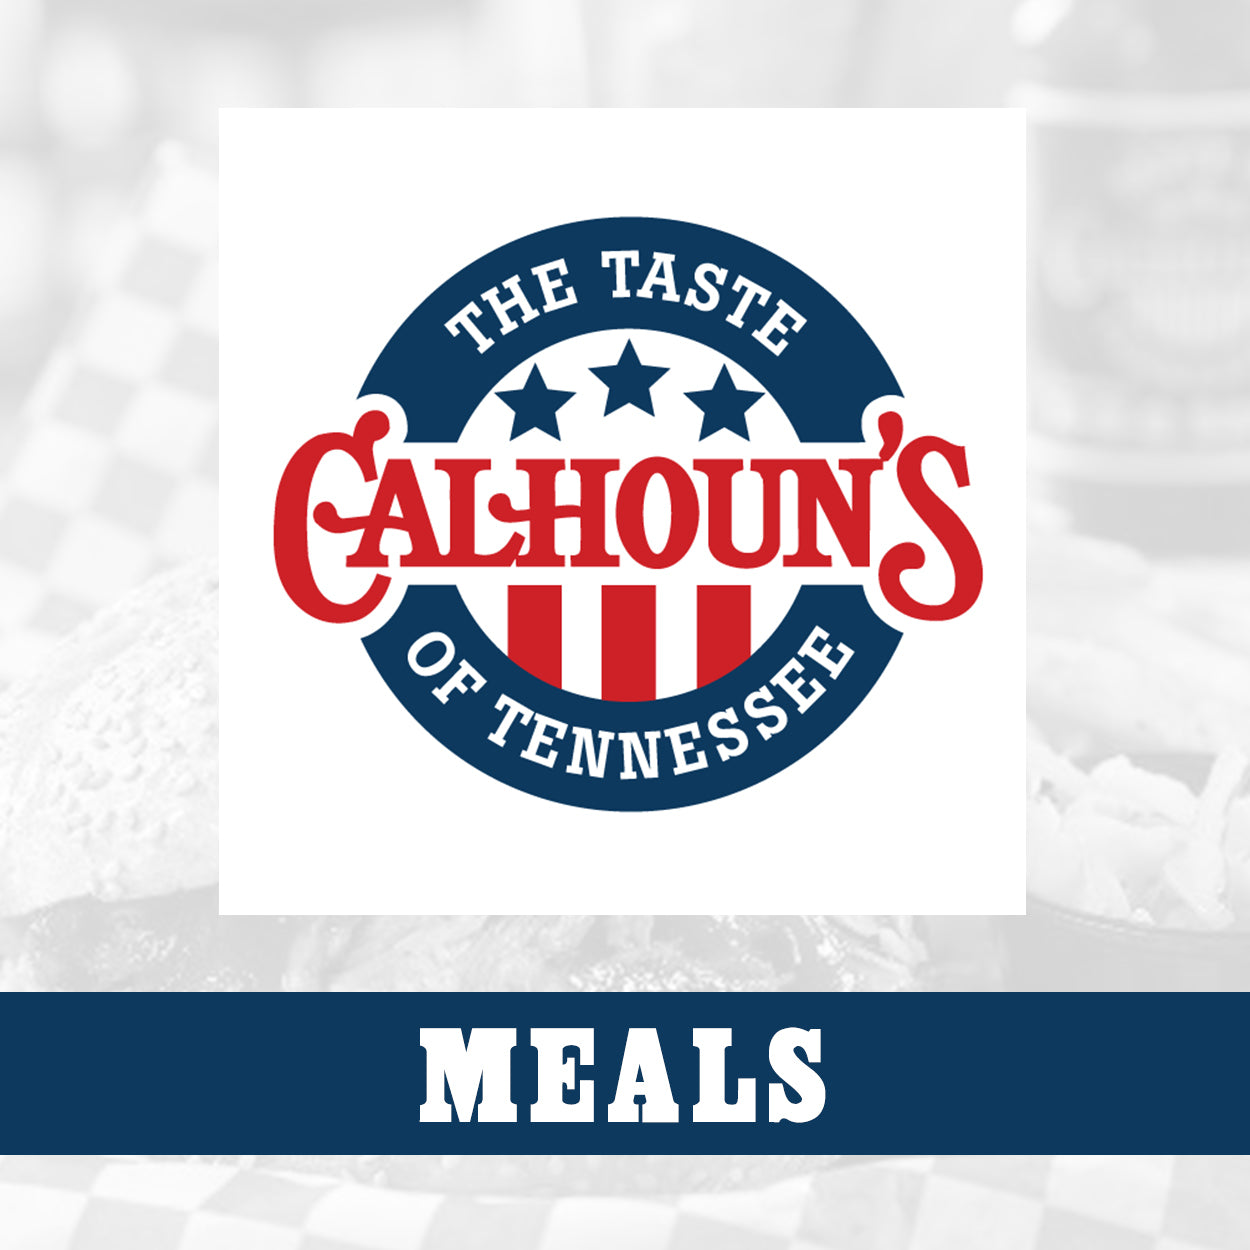 Calhoun's Full Tailgate Meals